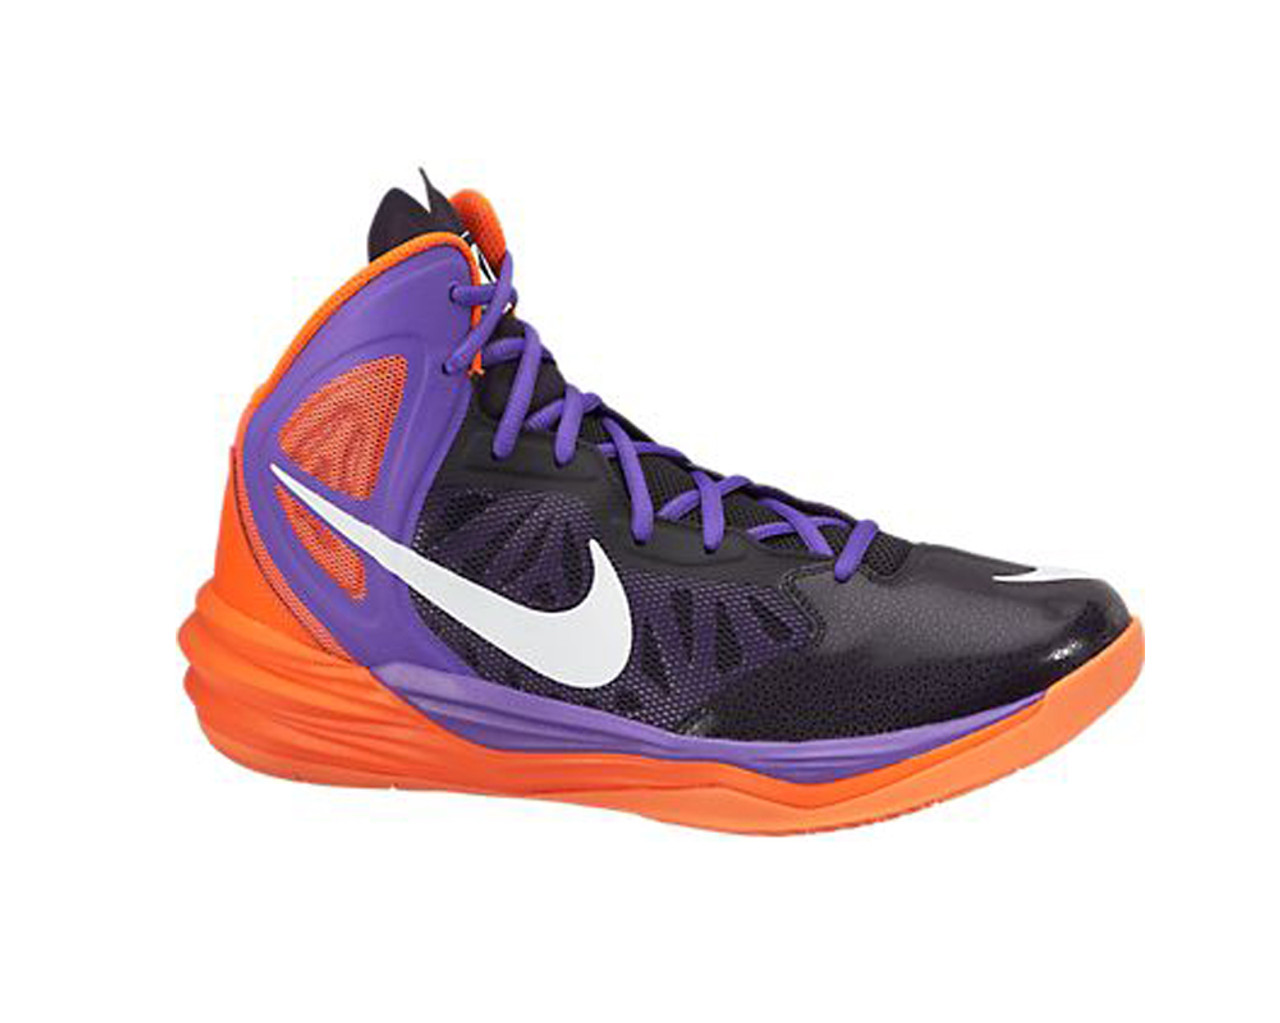 Nike Men's Prime Hype DF Basketball Shoes Purple | Discount Men's Athletic & More - Shoolu.com | Shoolu.com